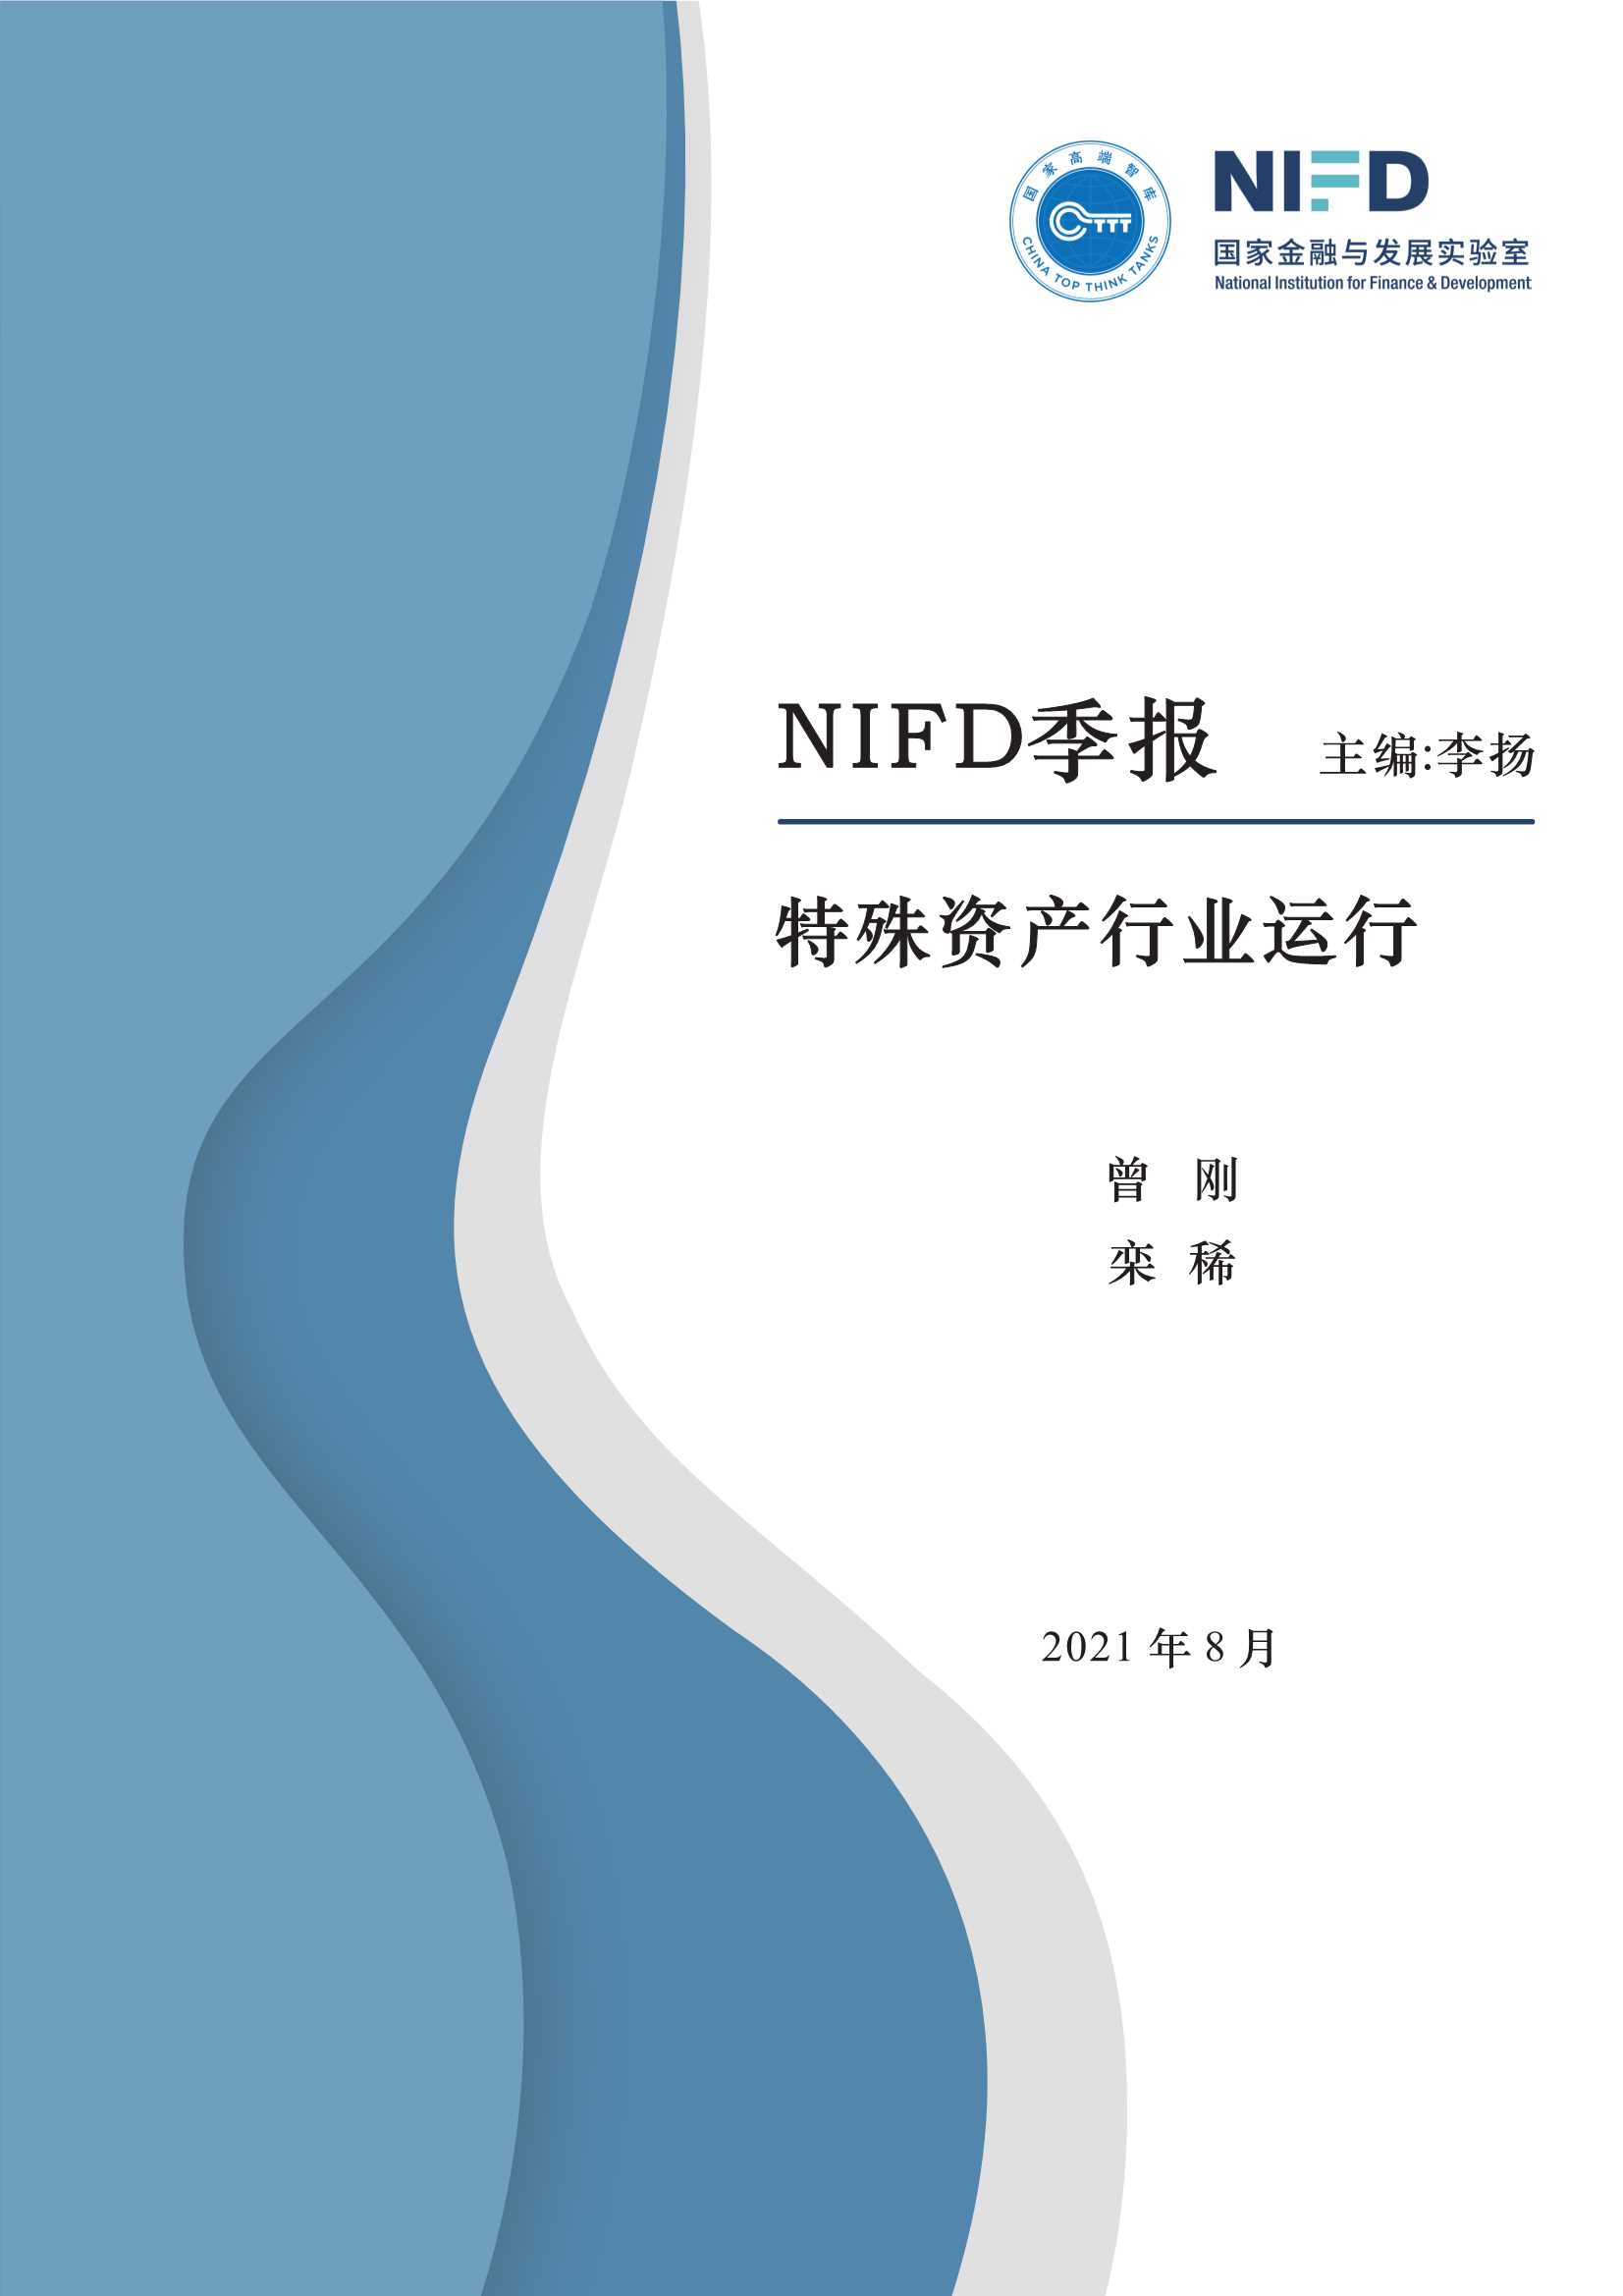 NIFD-2021Q2特殊资产行业运行-2021.08-23页